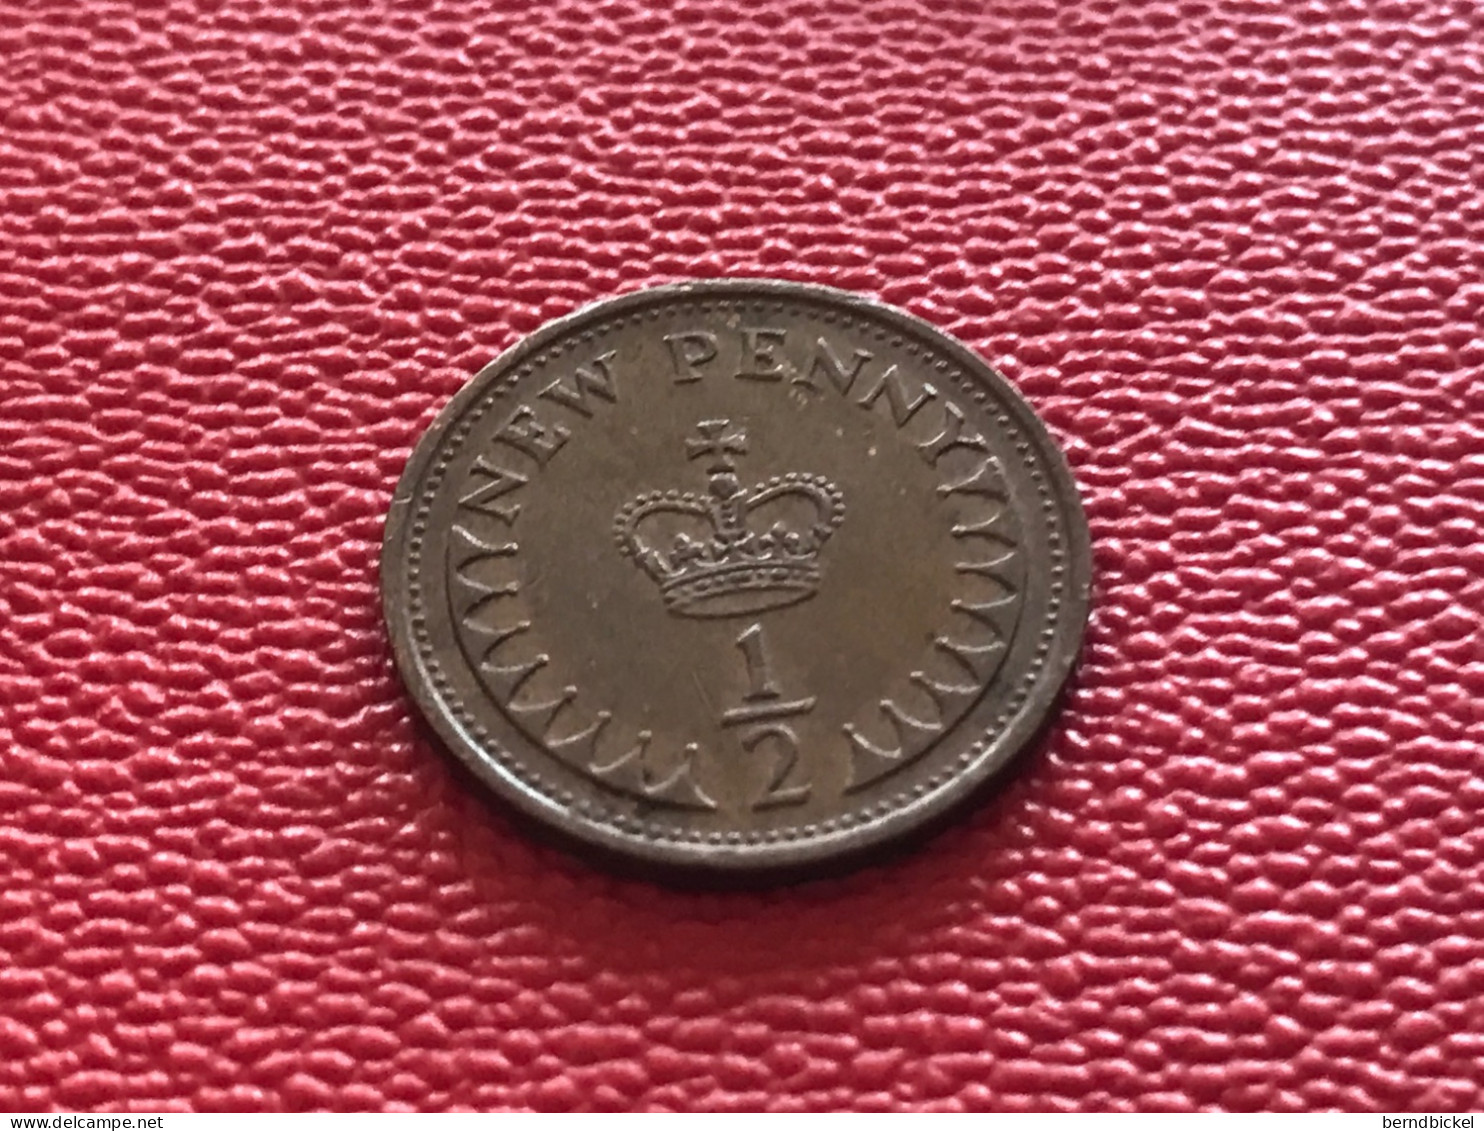 Münze Münzen Umlaufmünze Großbritannien 1/2 Penny 1977 - 1/2 Penny & 1/2 New Penny